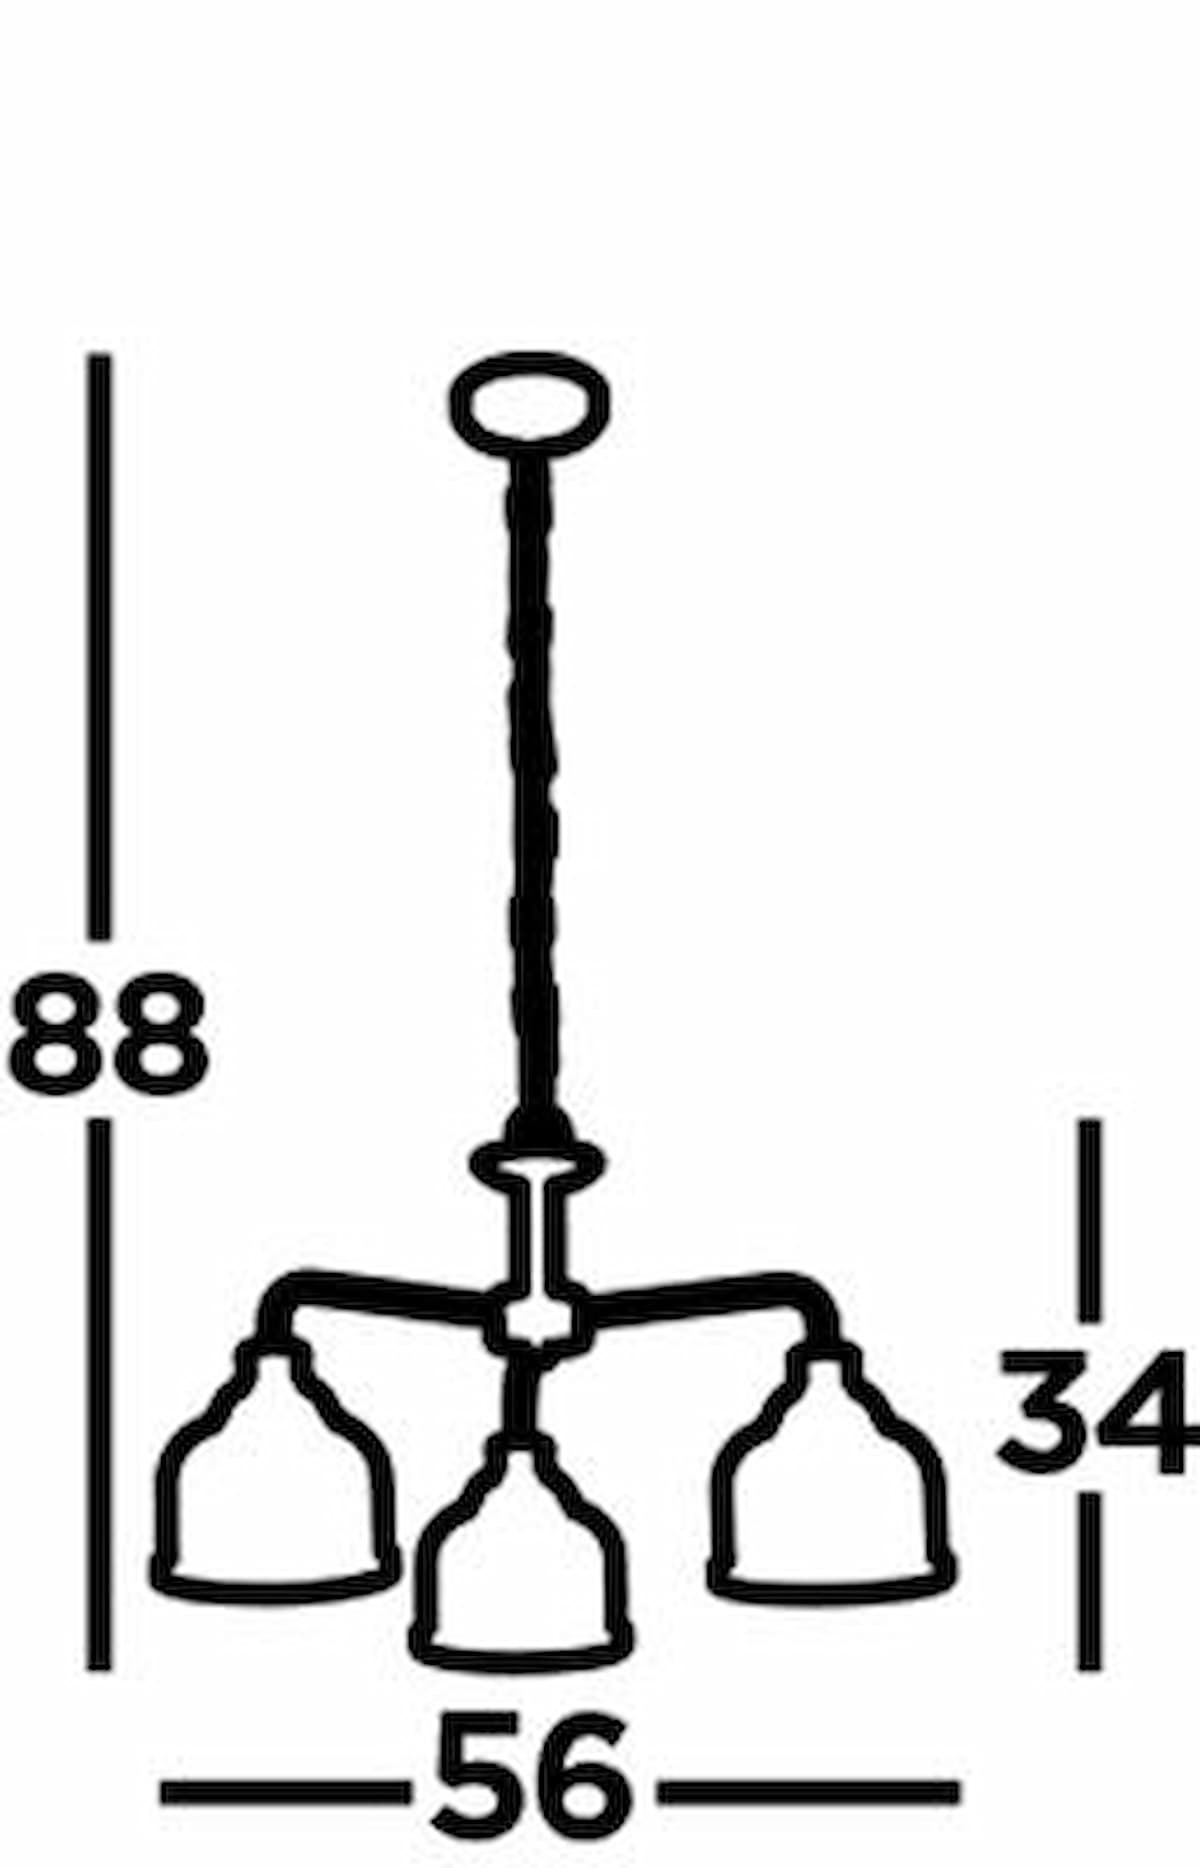 BISTRO II 3LT PENDANT-ANTIQUE BRASS & HOLOPHANE STYLE GLASS-1683-3AB